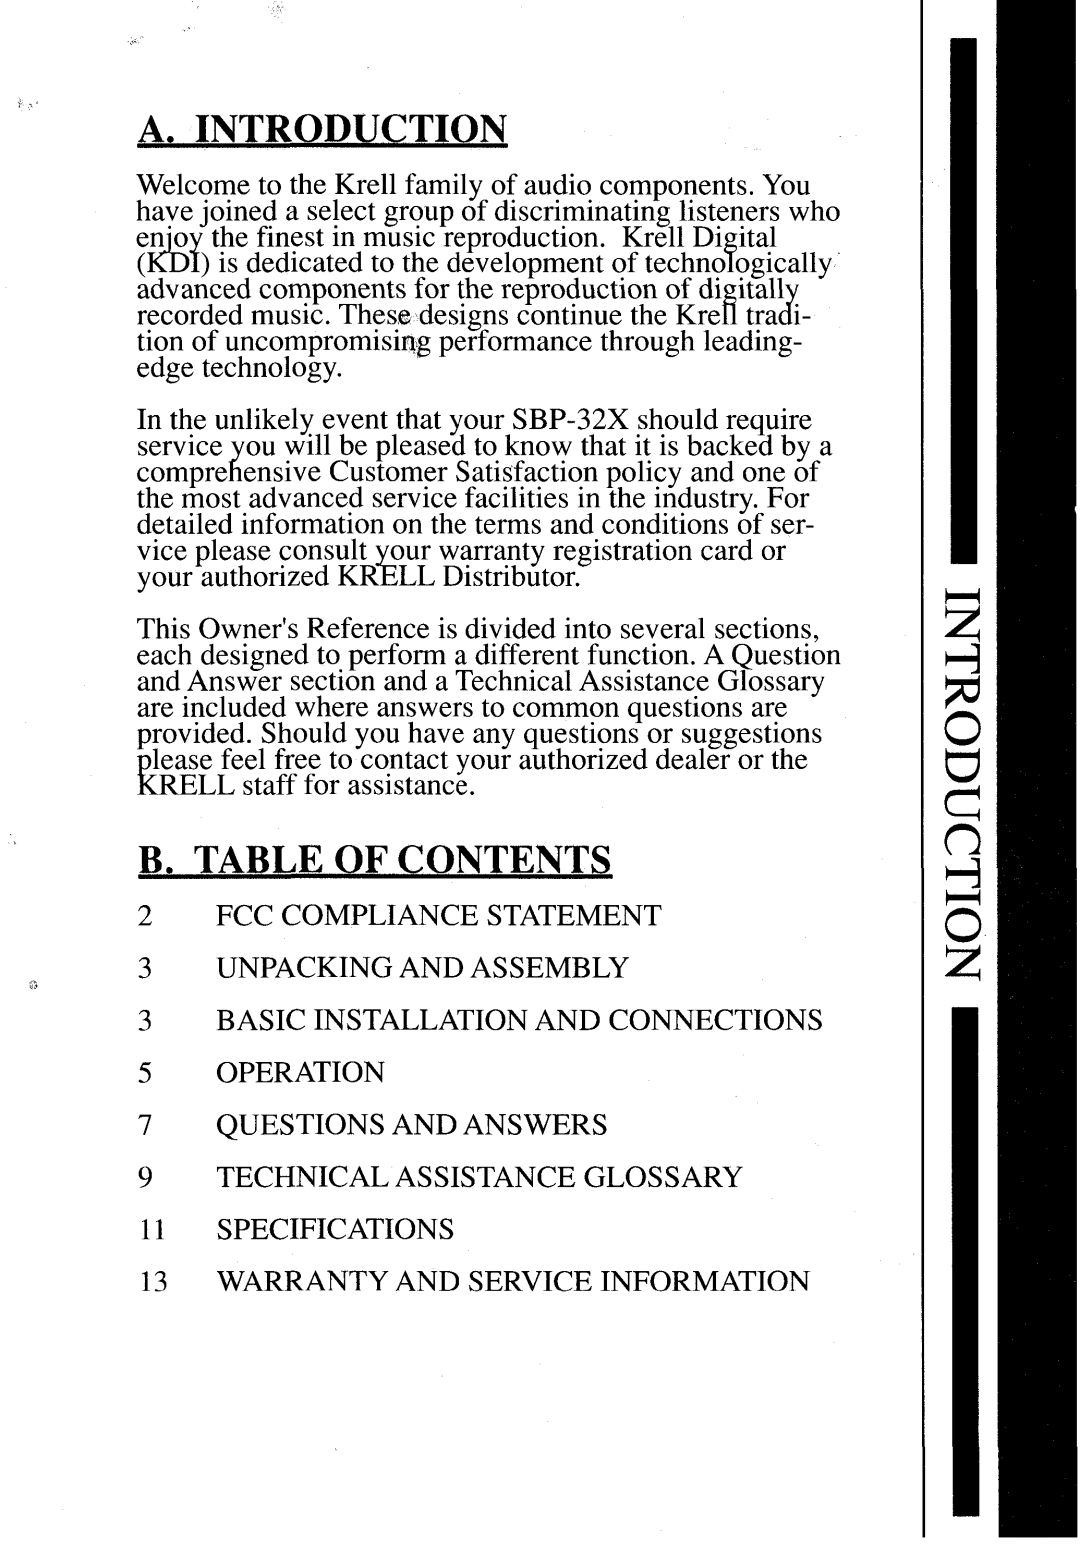 Krell Industries SBP-32X manual A.Introduction, B., Tableof,,Contents 